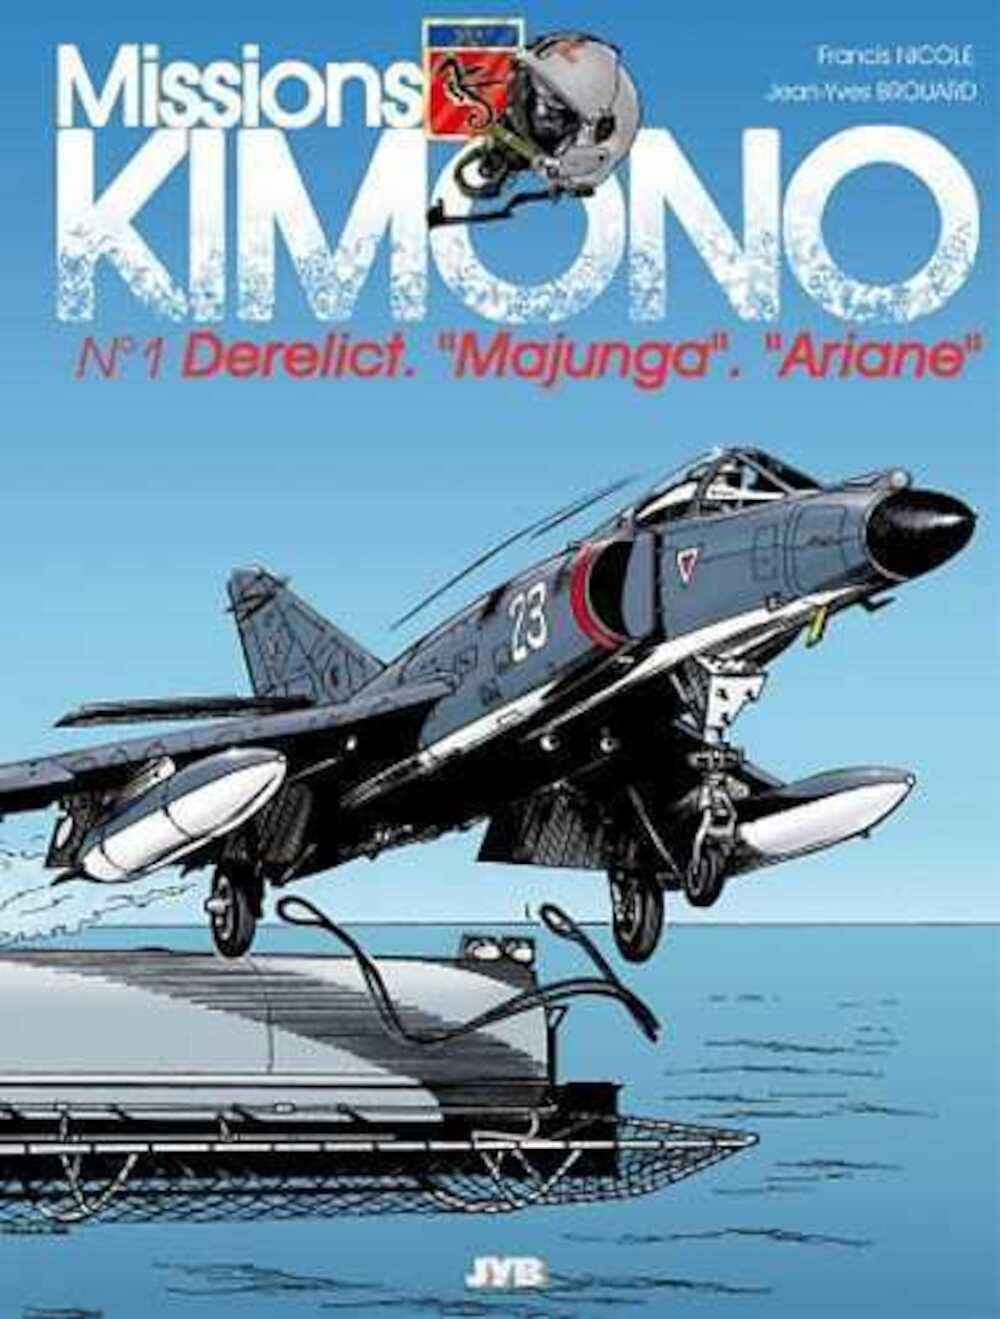 Missions Kimono. Vol. 1. Derelict. Virus sur le "Majunga". Objectif "Ariane"